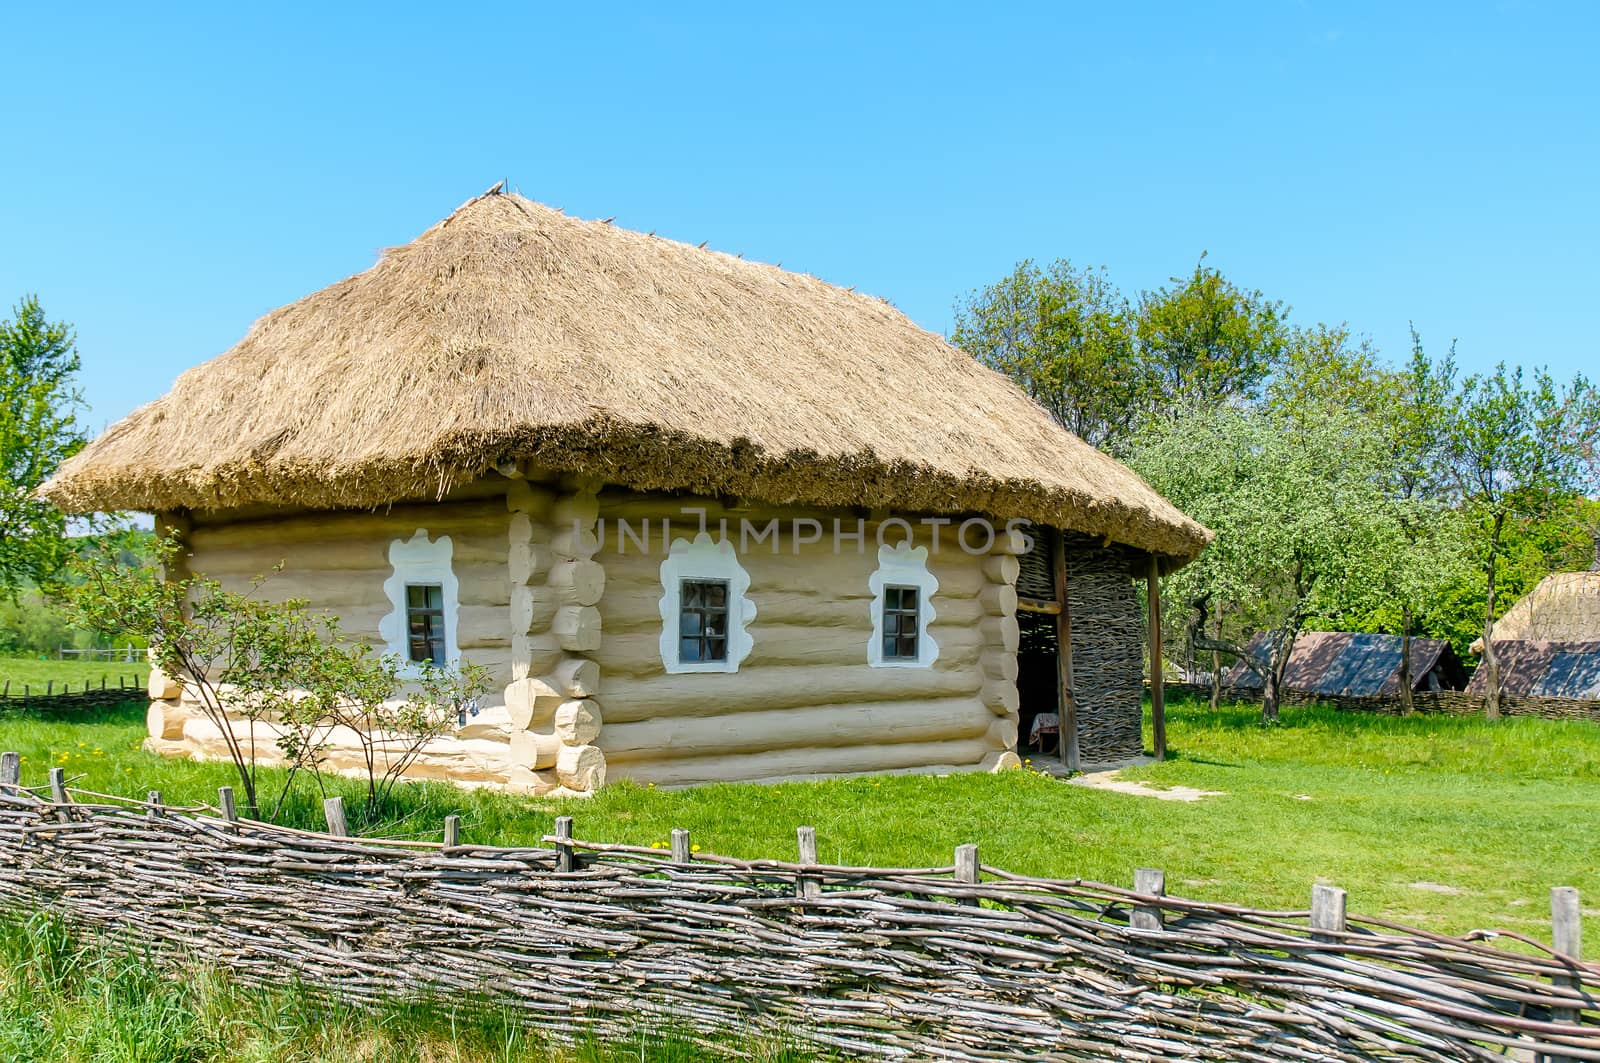 A typical ukrainian antique house, in Pirogovo near Kiev